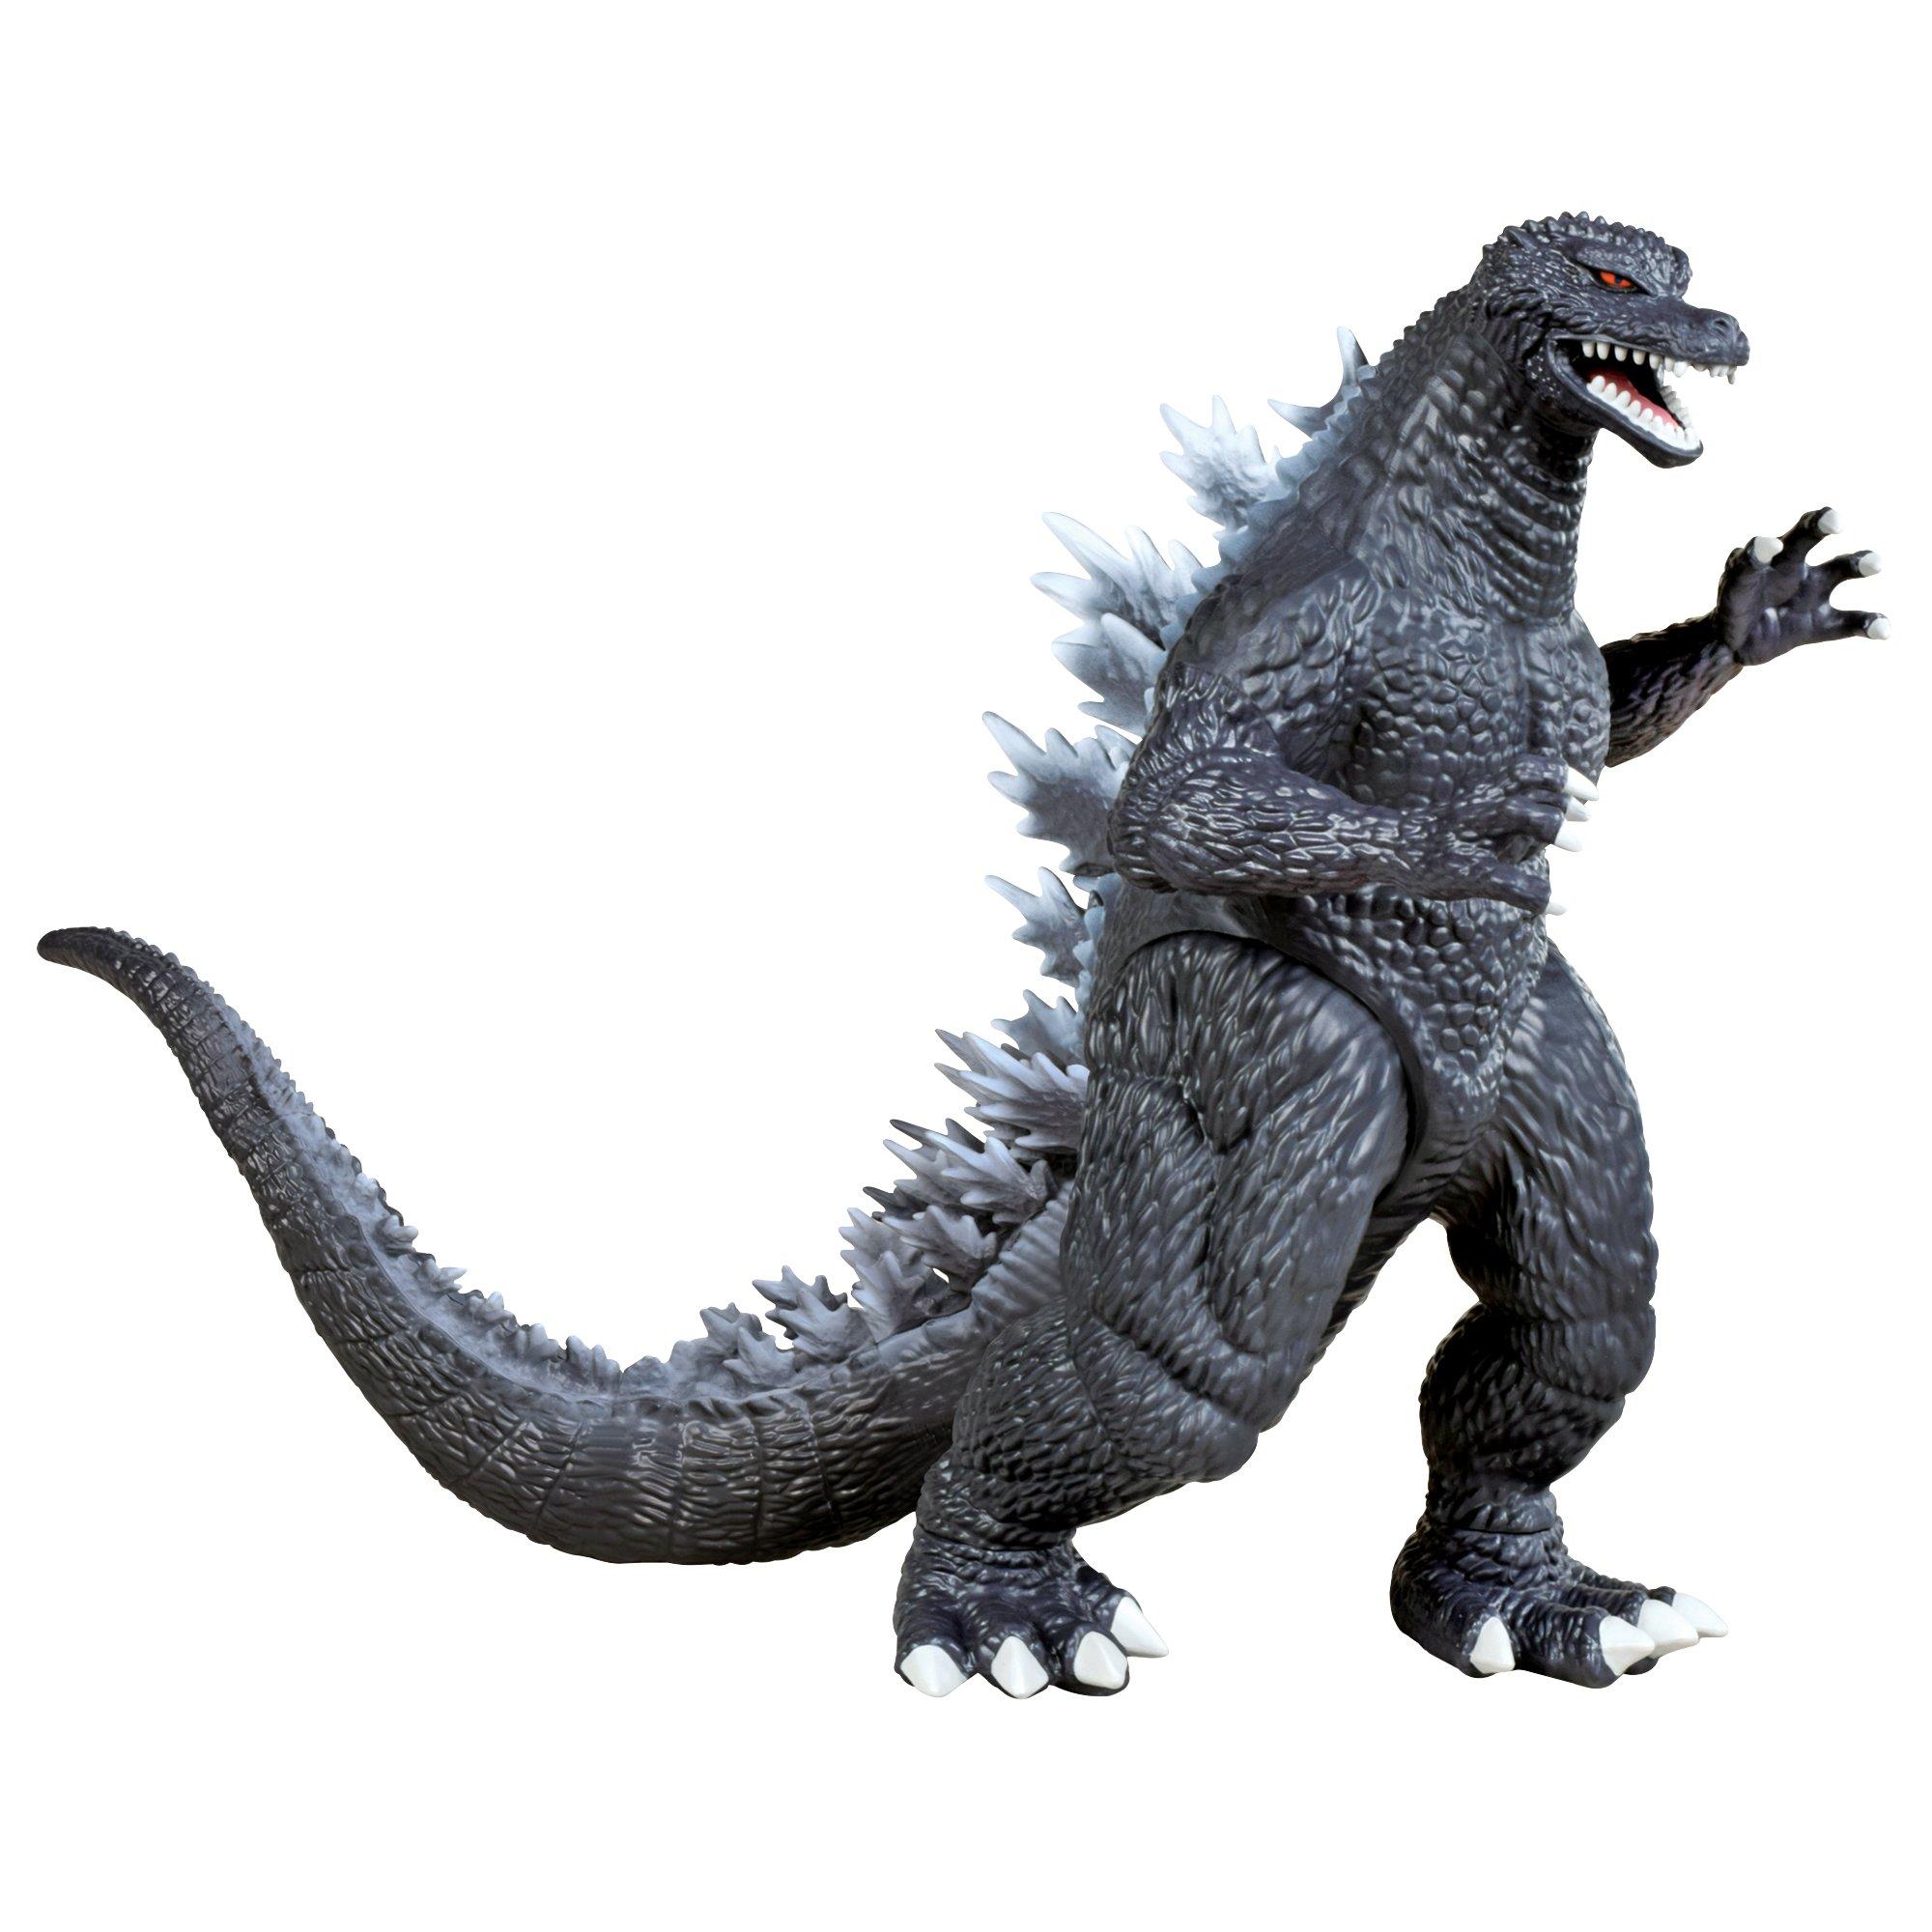 Playmates Godzilla 12 Inch 2019 Figure Final Wars 2004 for sale online 